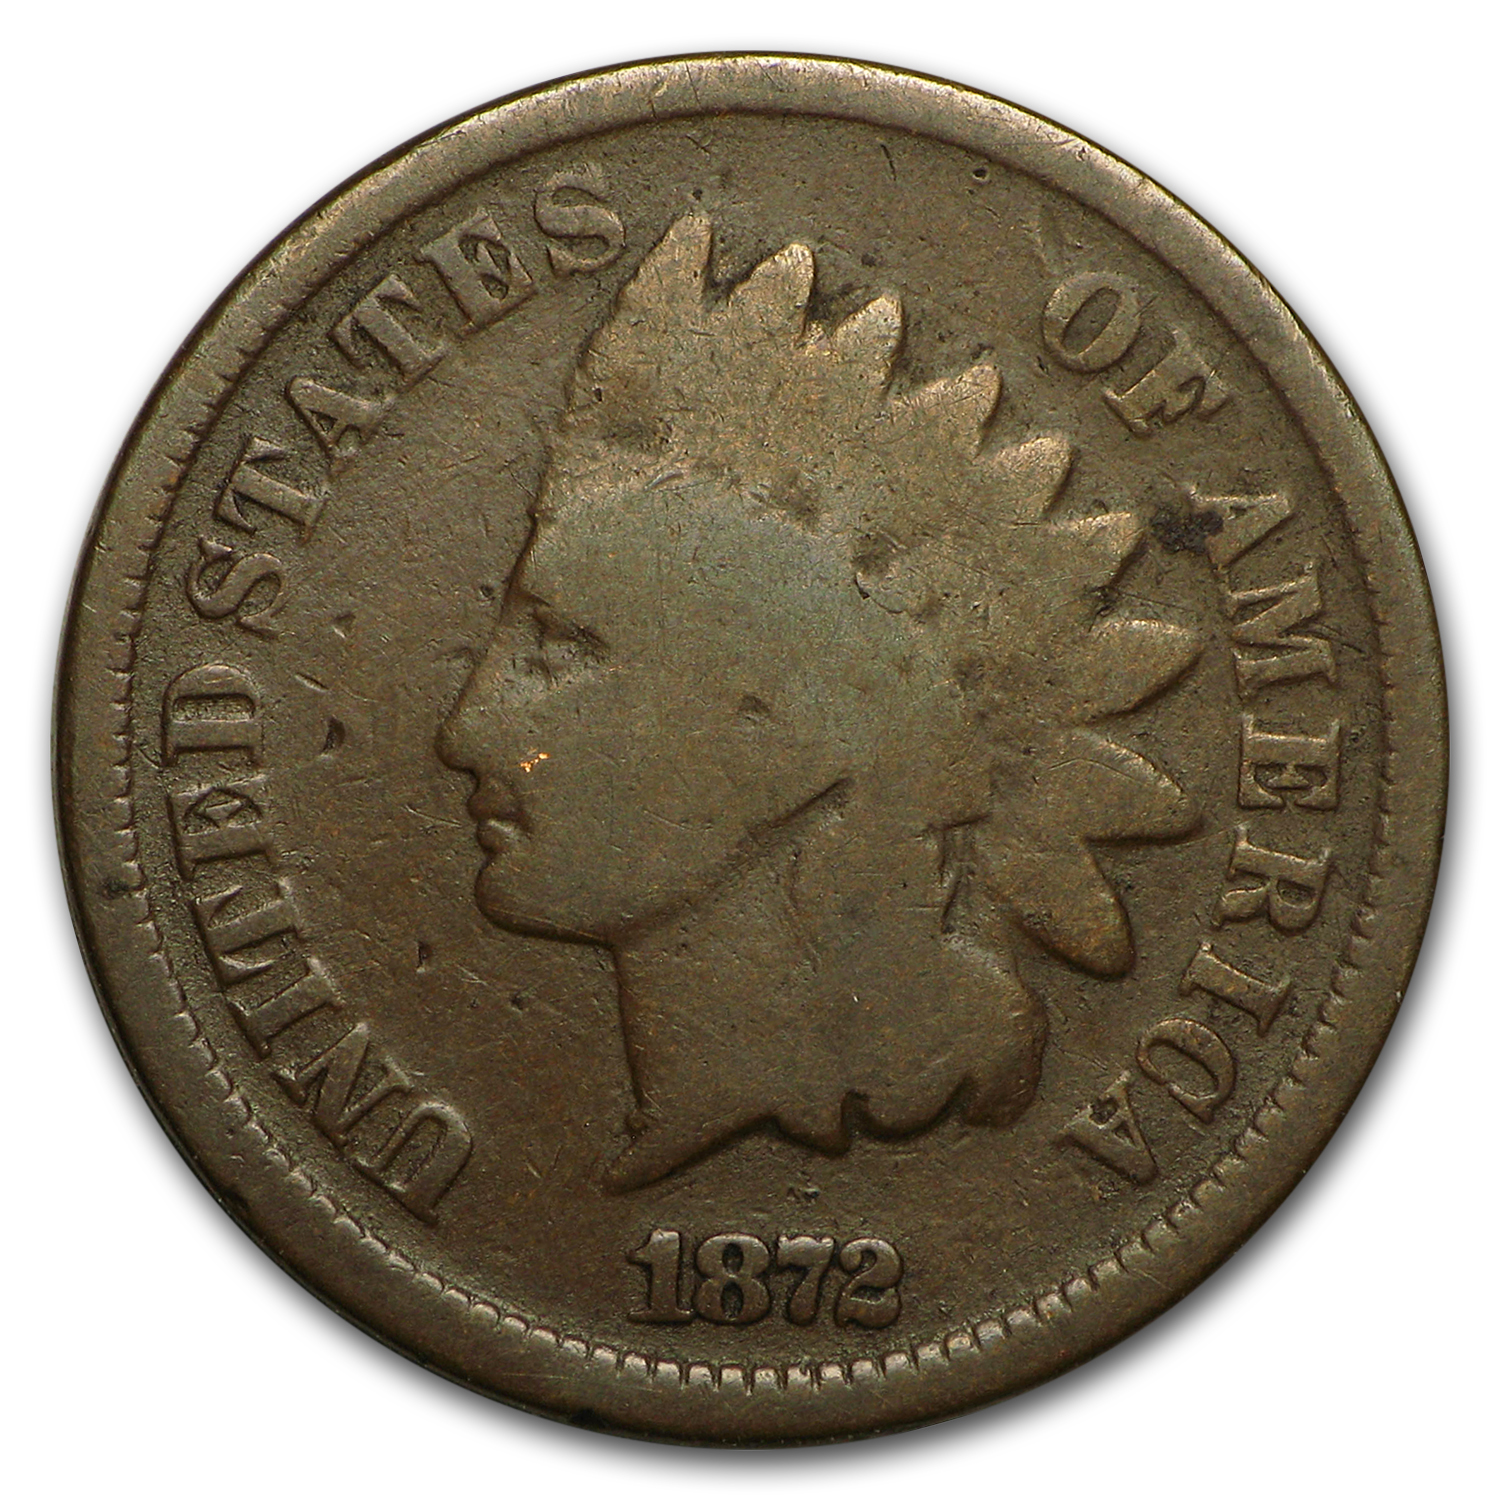 Buy 1872 Indian Head Cents Online?